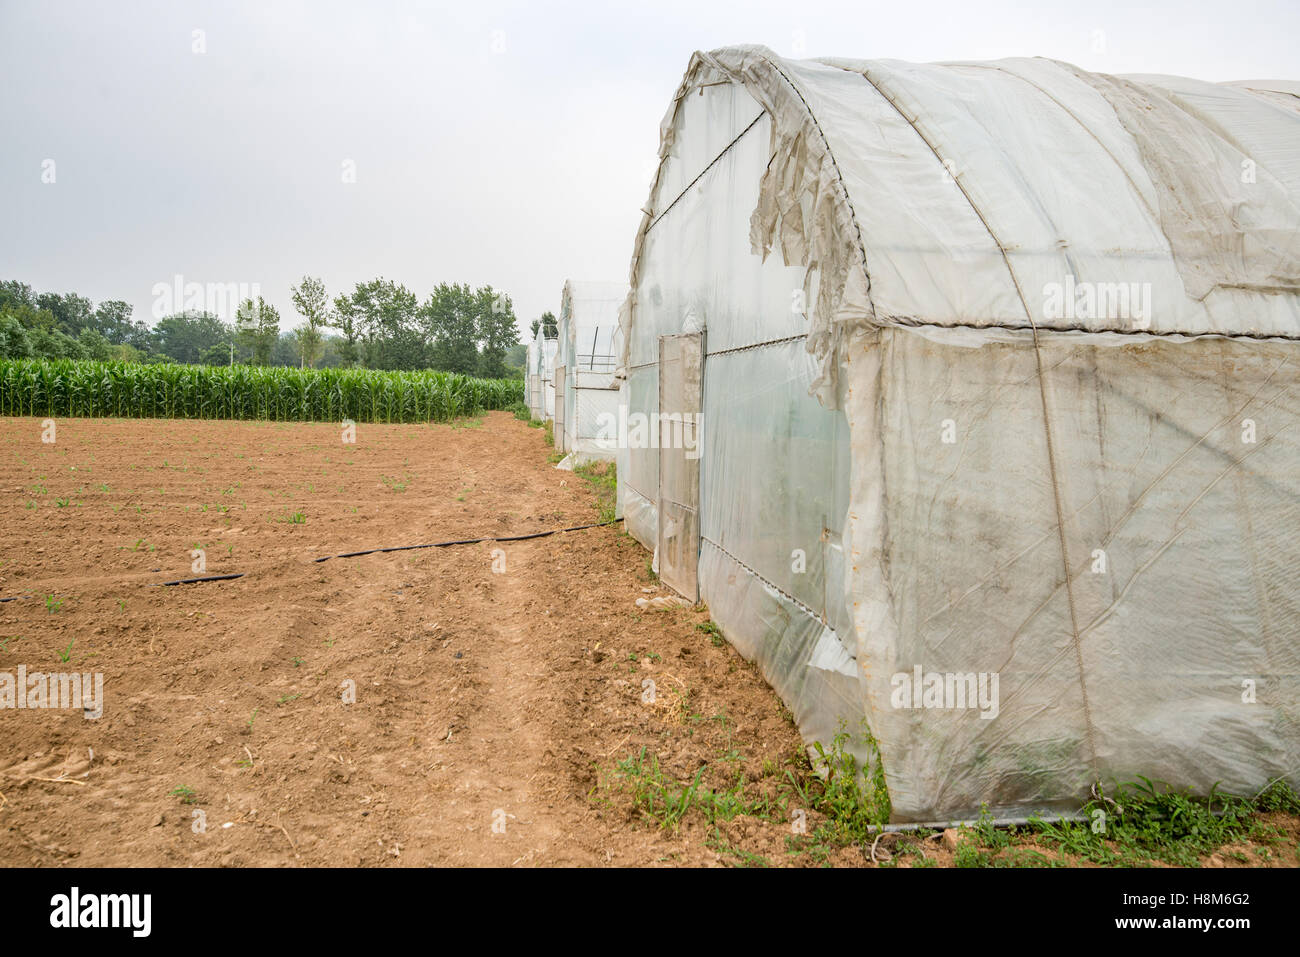 Beijing, China - Stalks of corn growing next to greenhouses on a farm near Beijing, China. Stock Photo